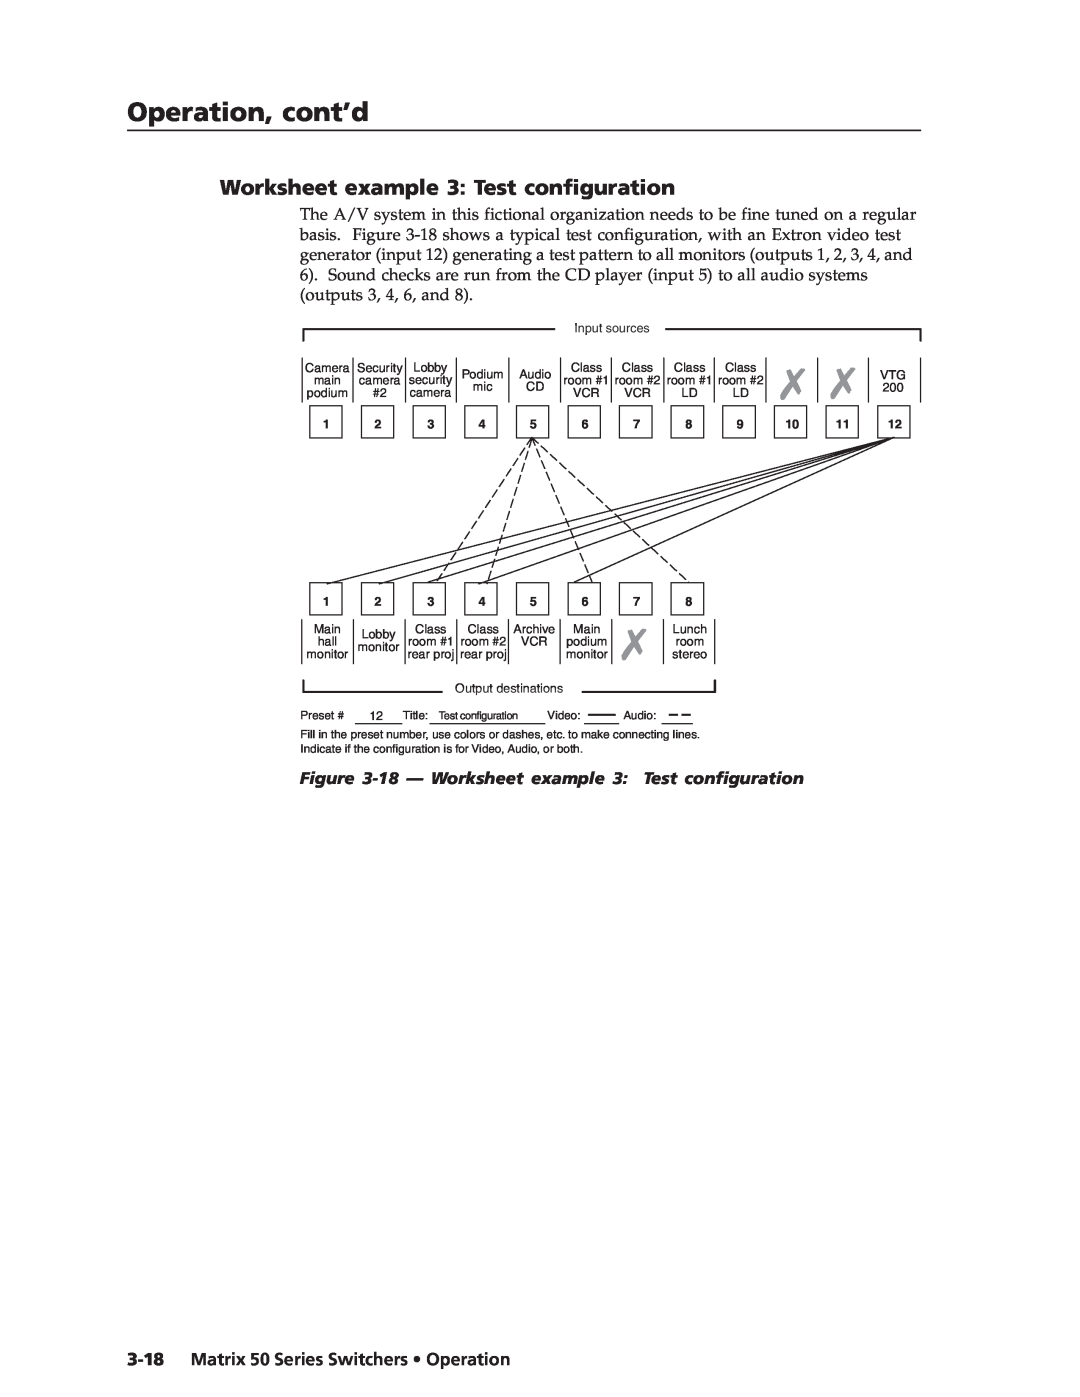 Extron electronic manual 18 - Worksheet example 3 Test configuration, Matrix 50 Series Switchers Operation 